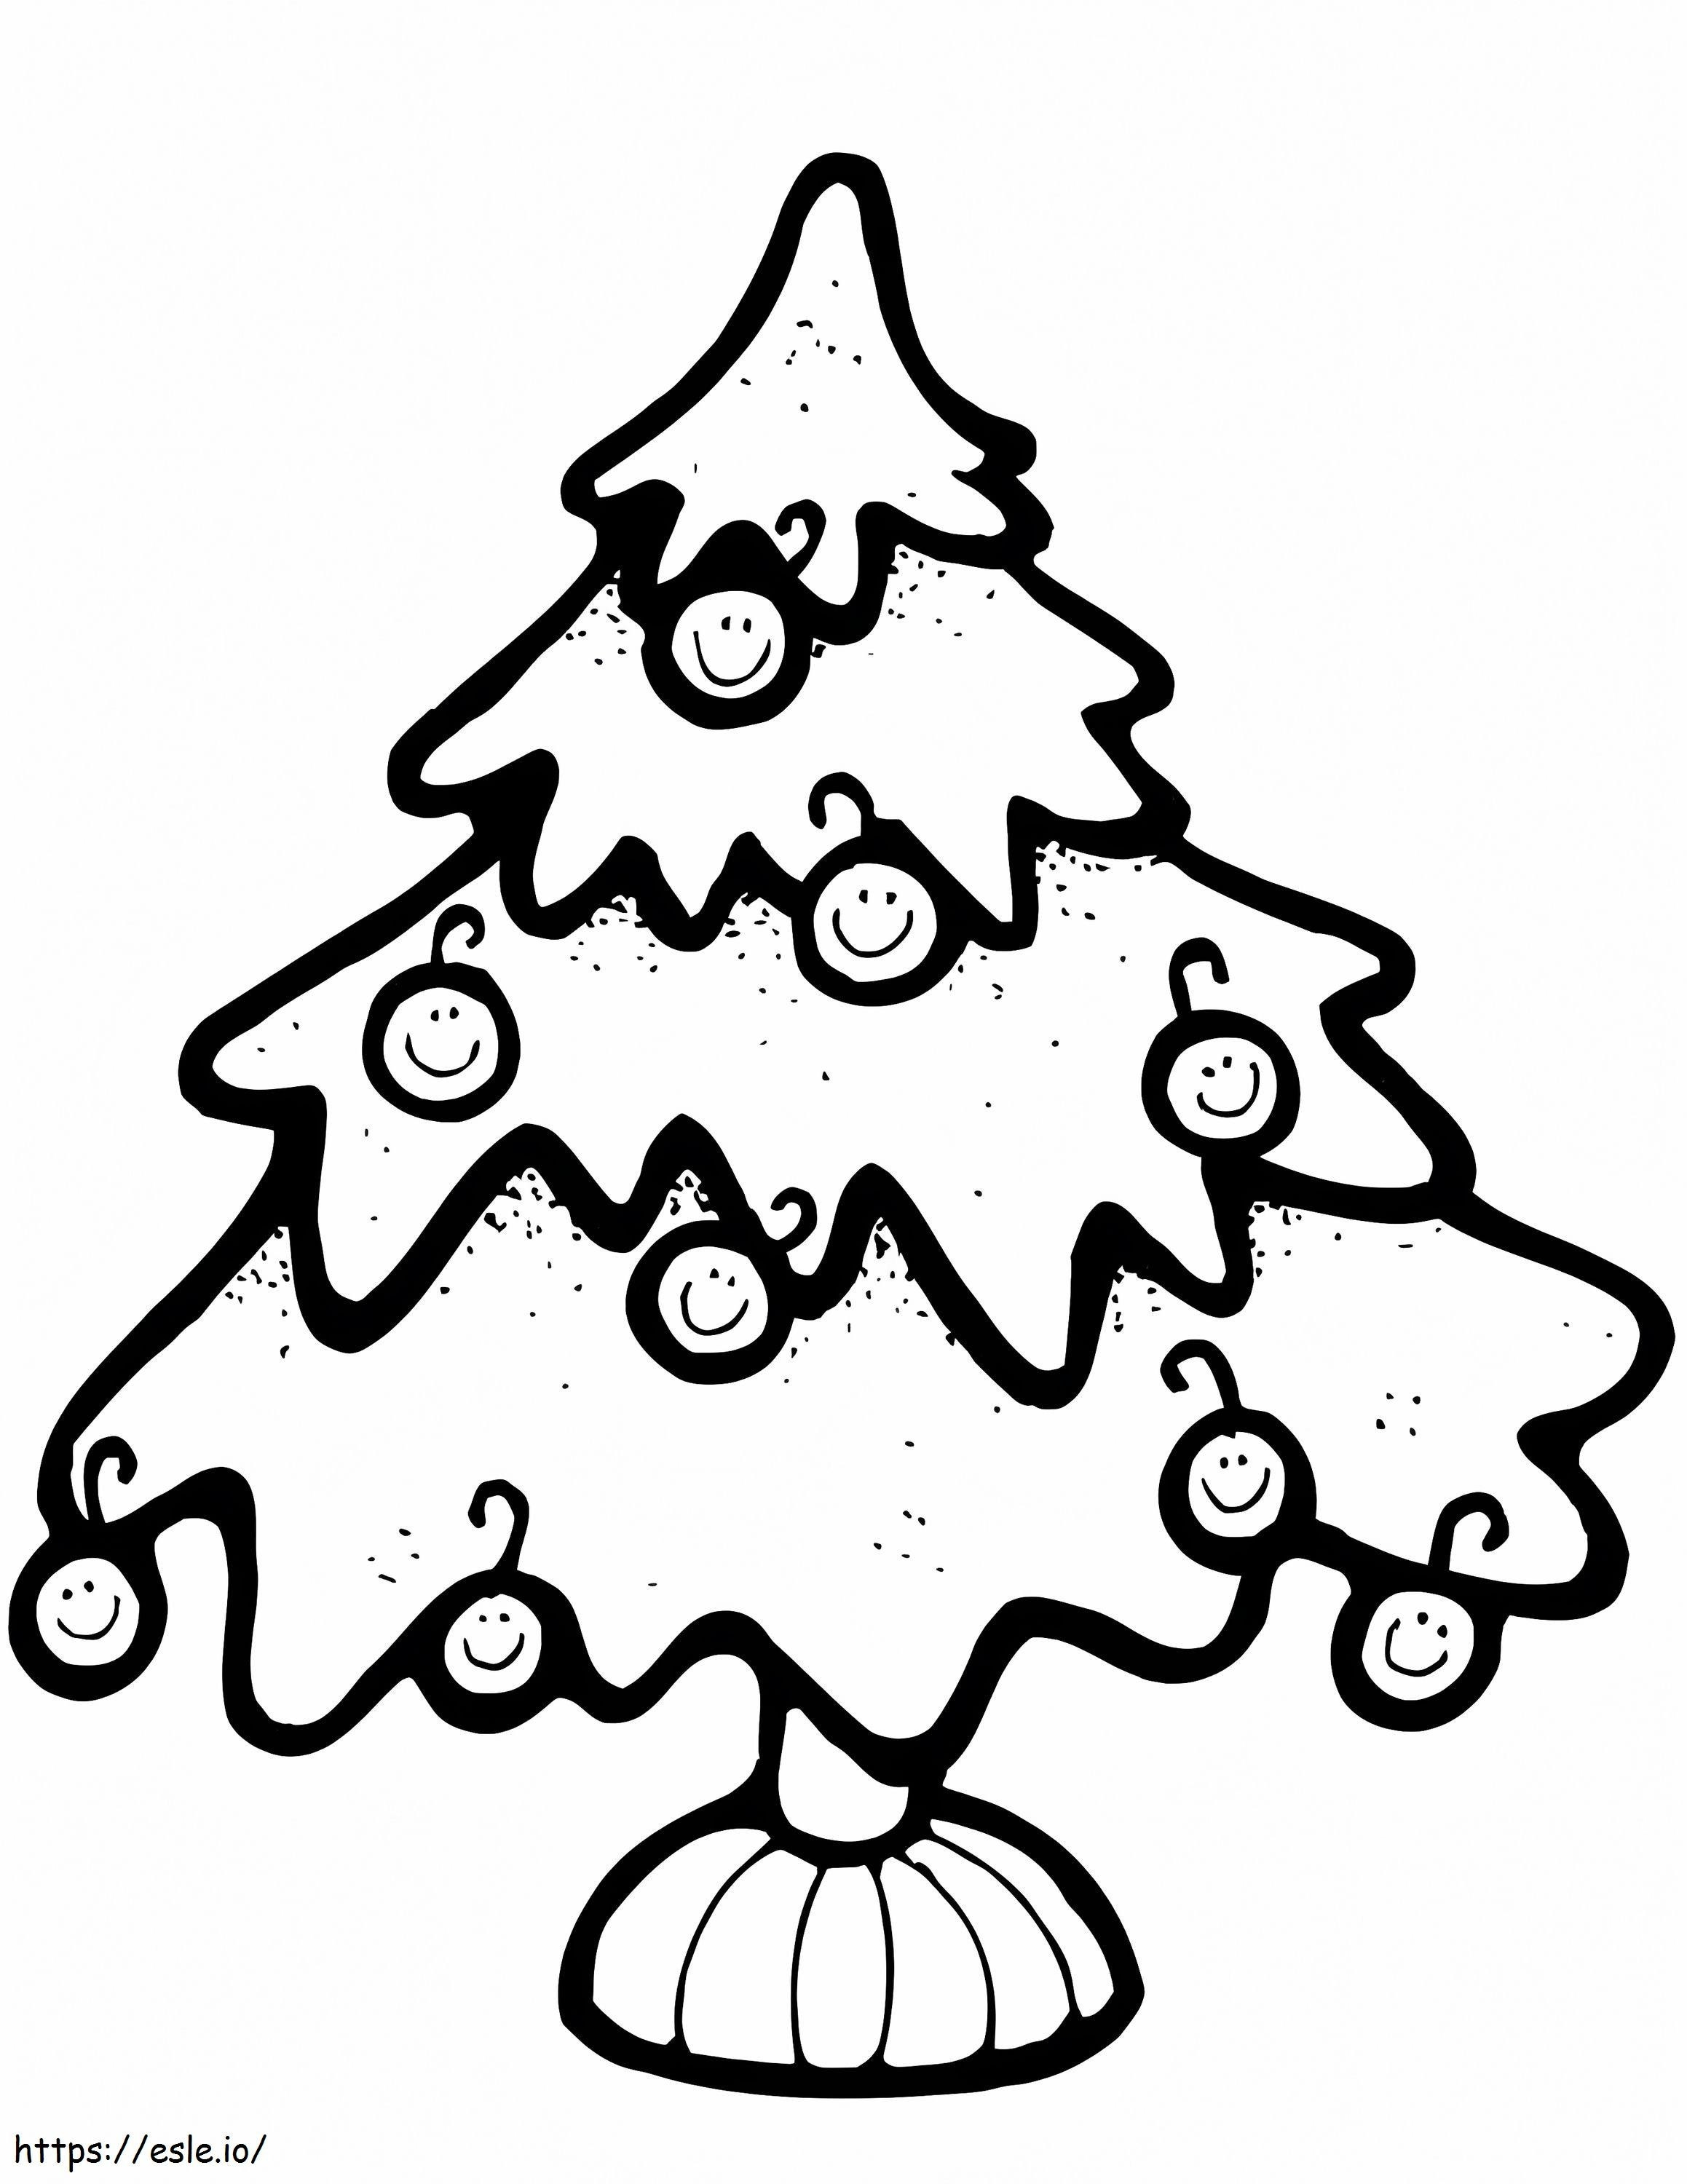 Charming Christmas Tree coloring page